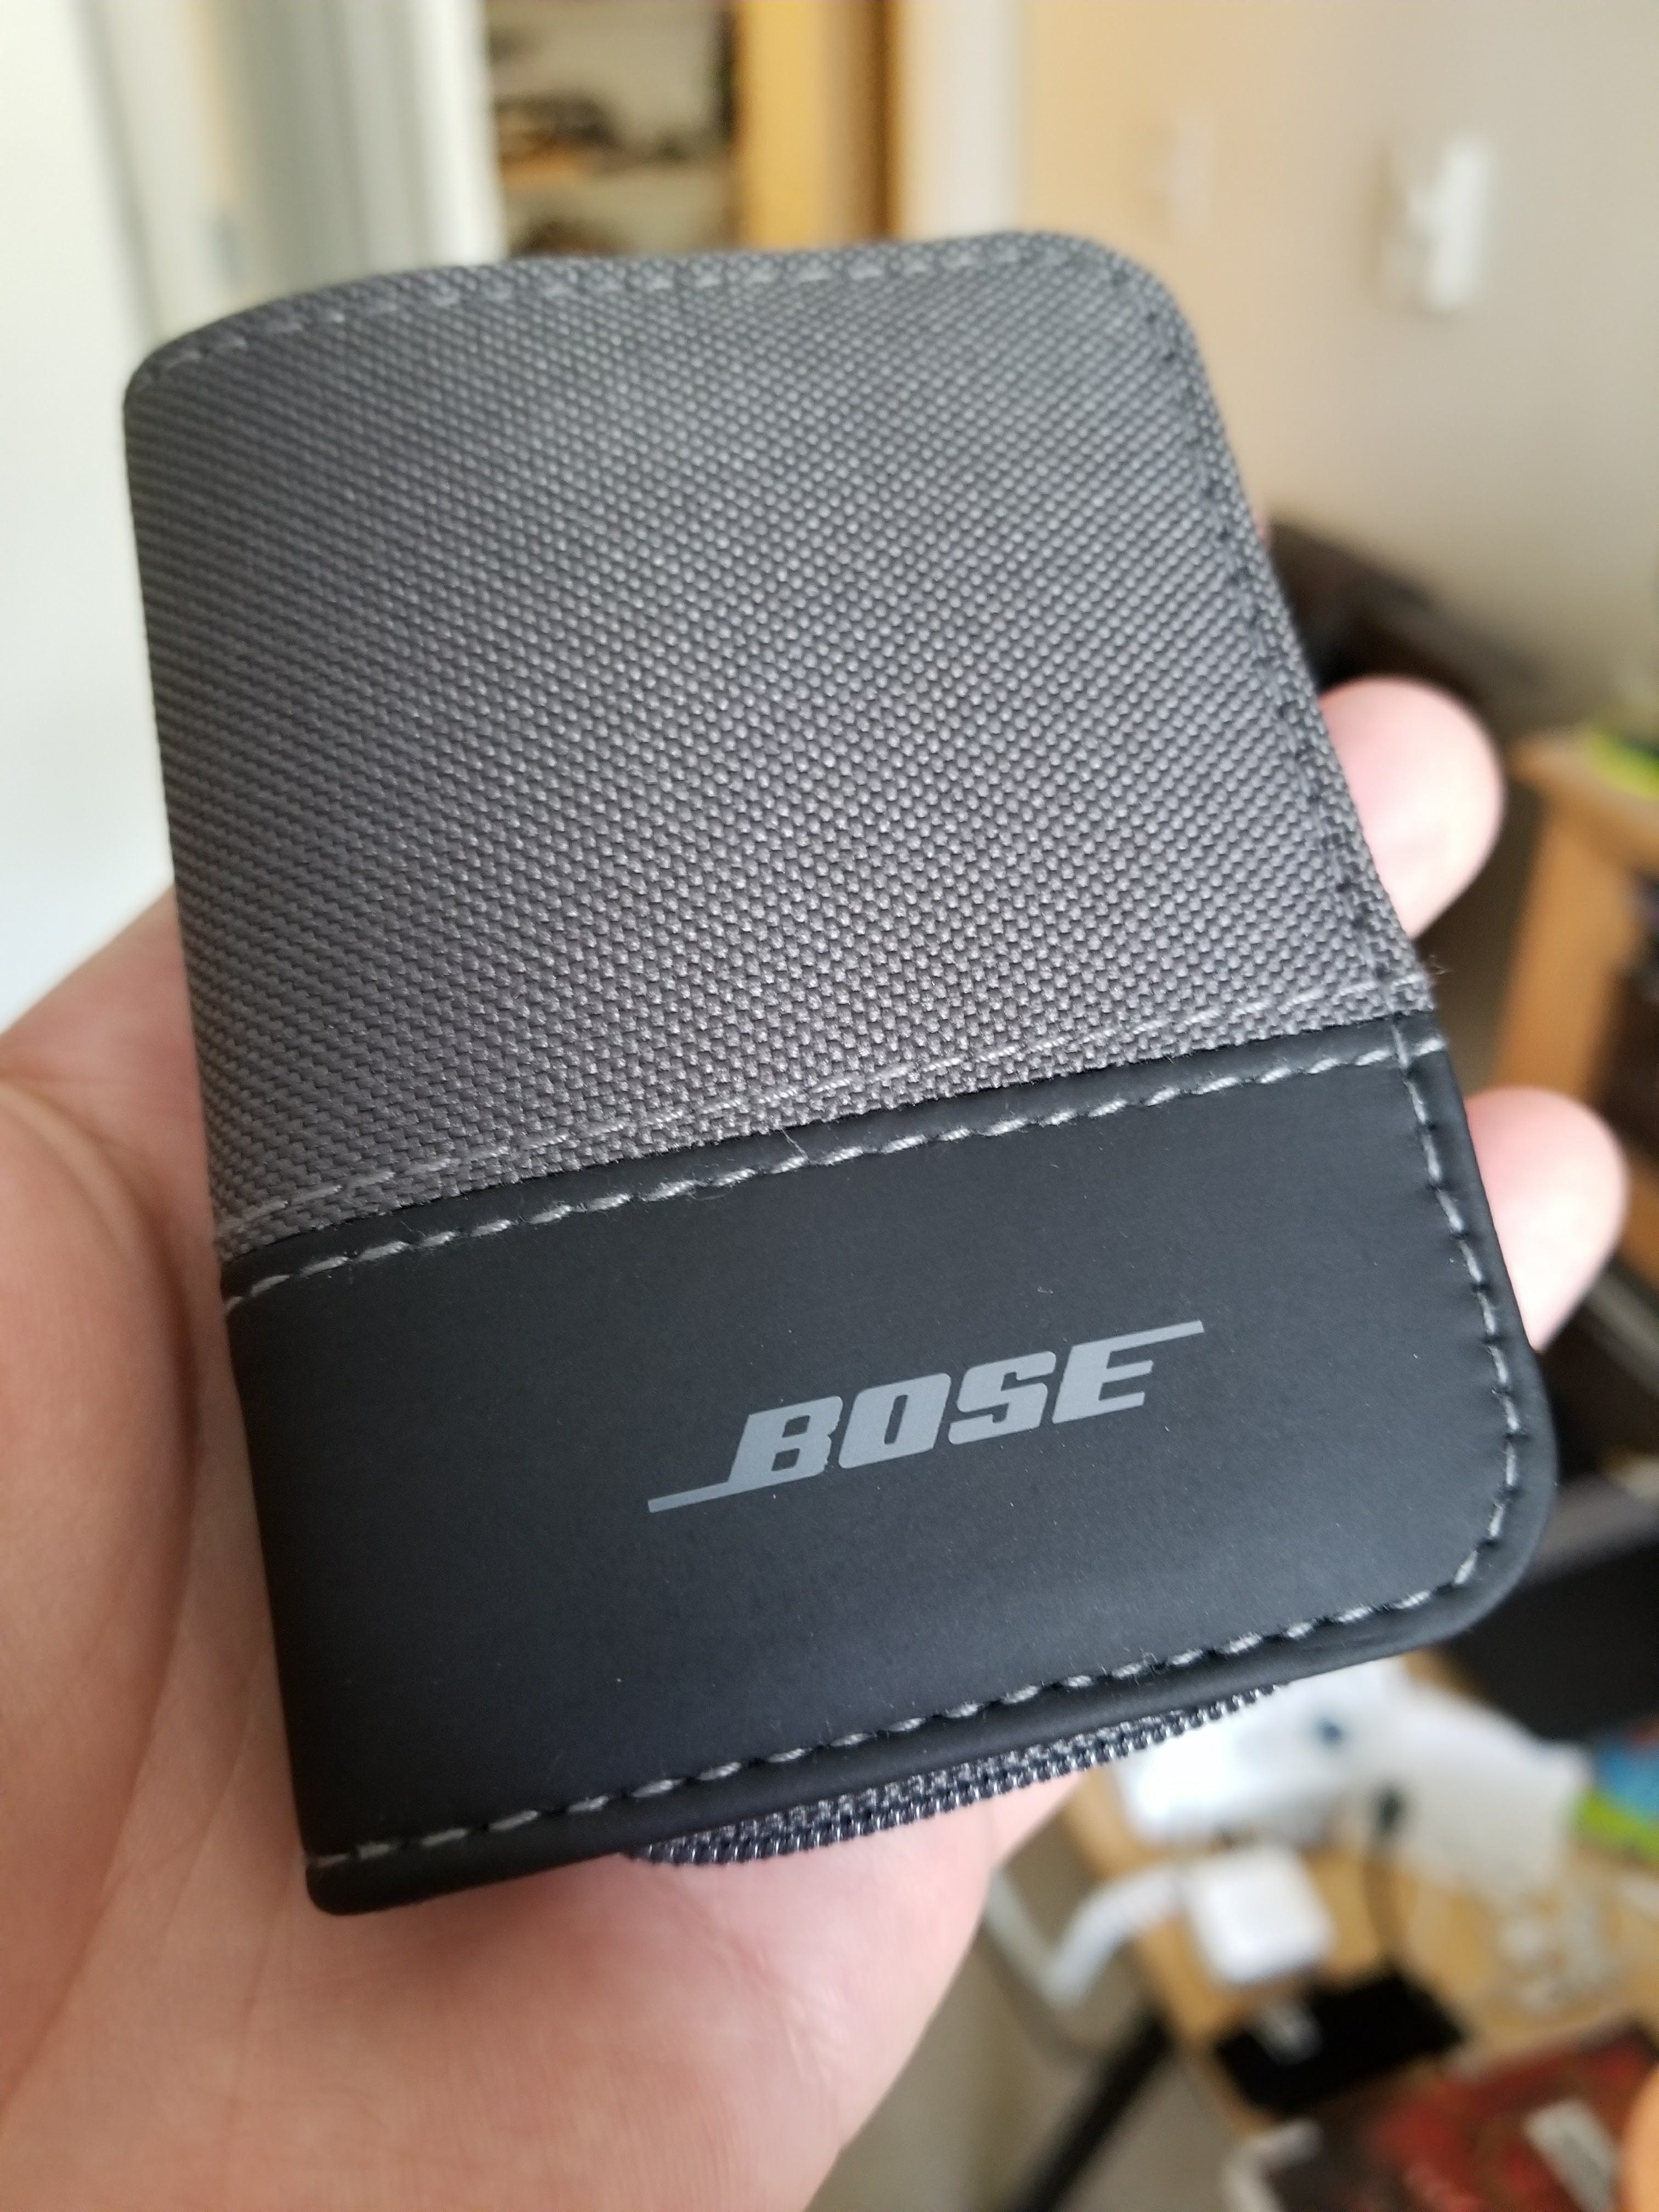 Bose Soundtrue Ultra In Ear Headphones Review The Hidden Gem Of Bose S Lineup By Alex Rowe Medium